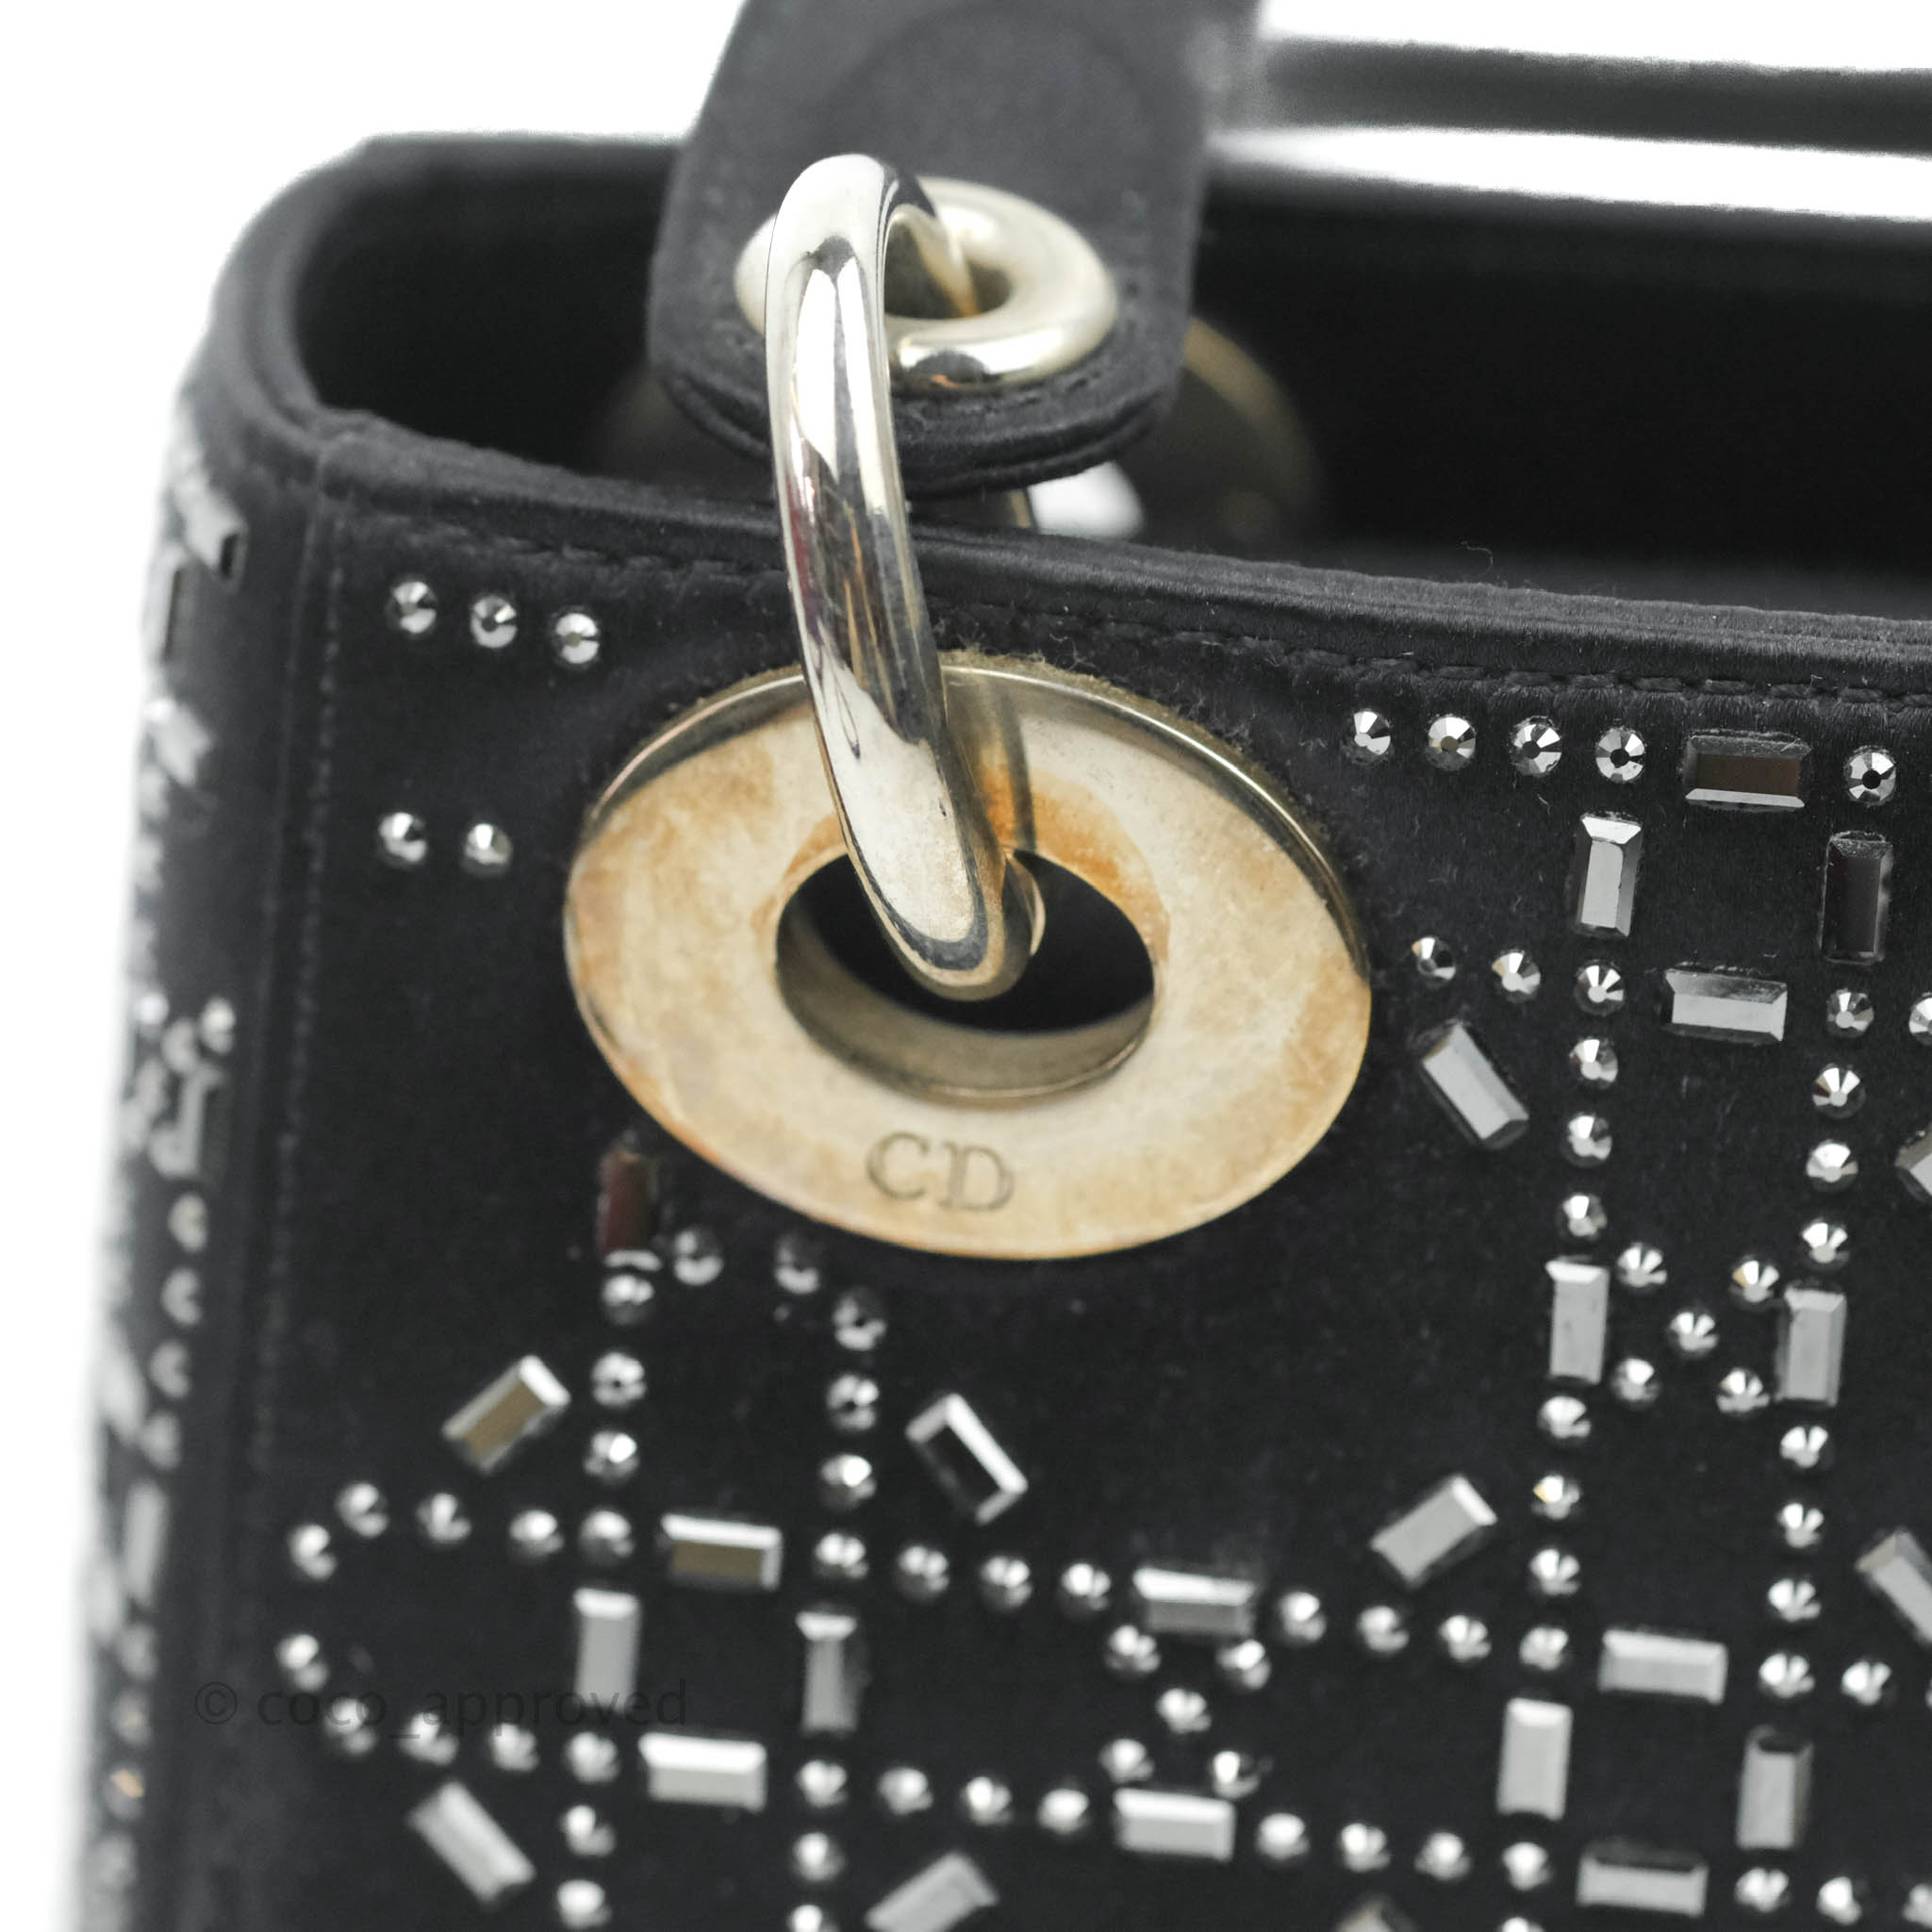 Christian Dior Mini Lady Dior Grey Lambskin Cannage Silver Hardware – Coco  Approved Studio